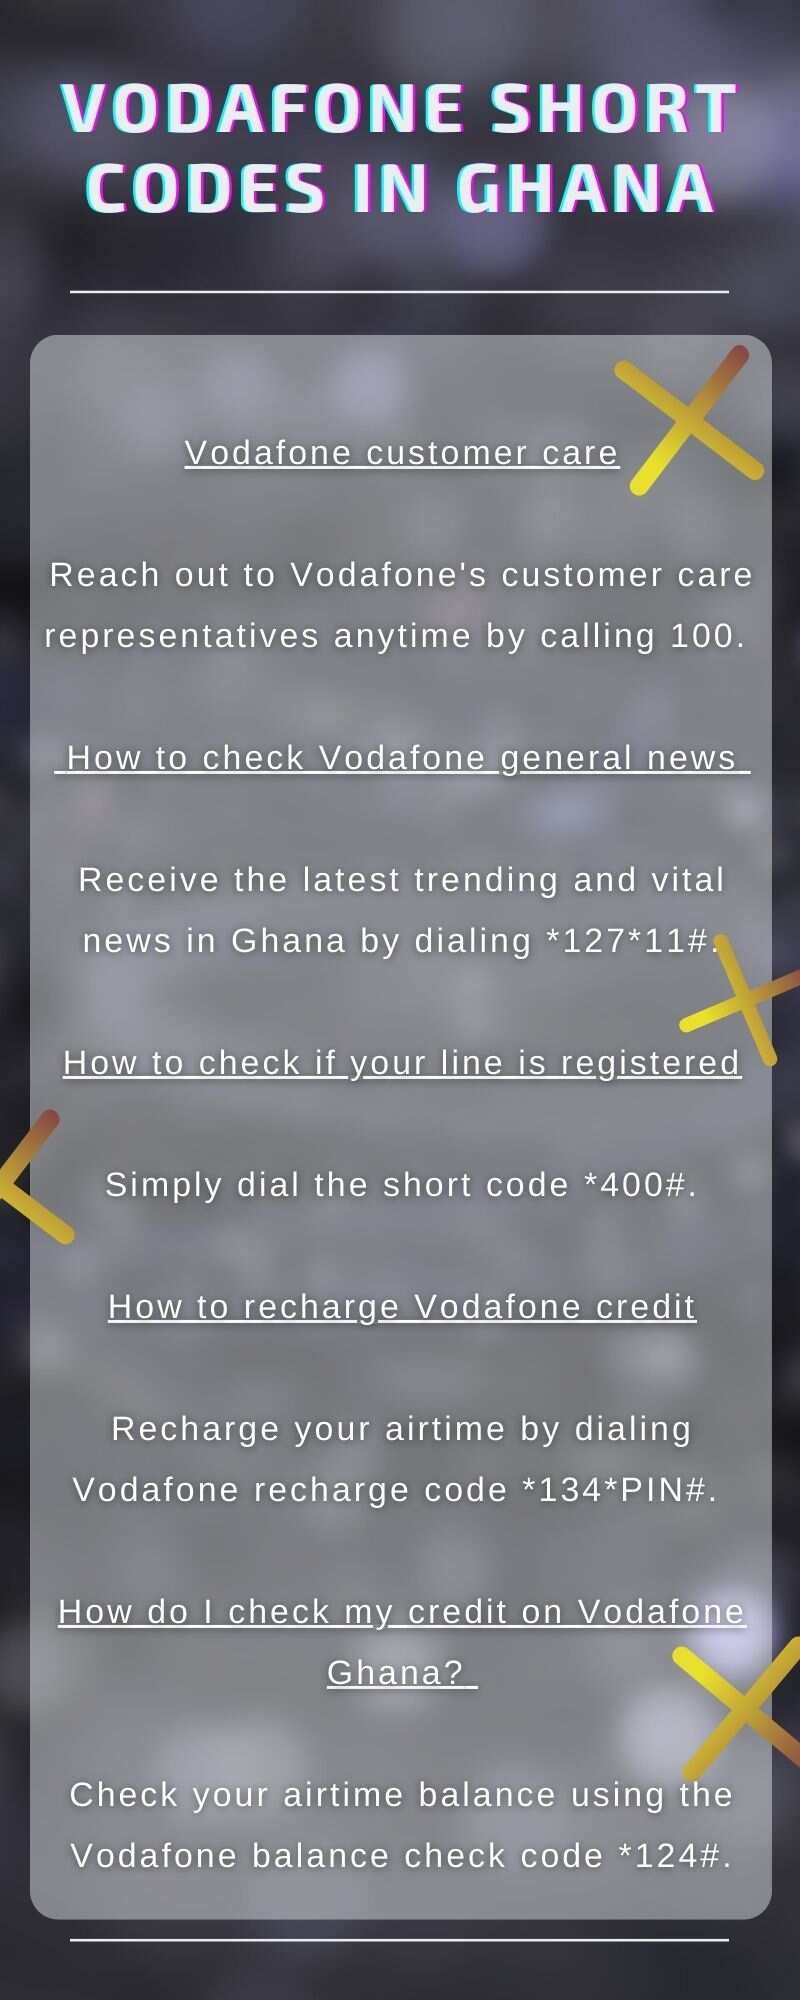 Vodafone short codes in Ghana